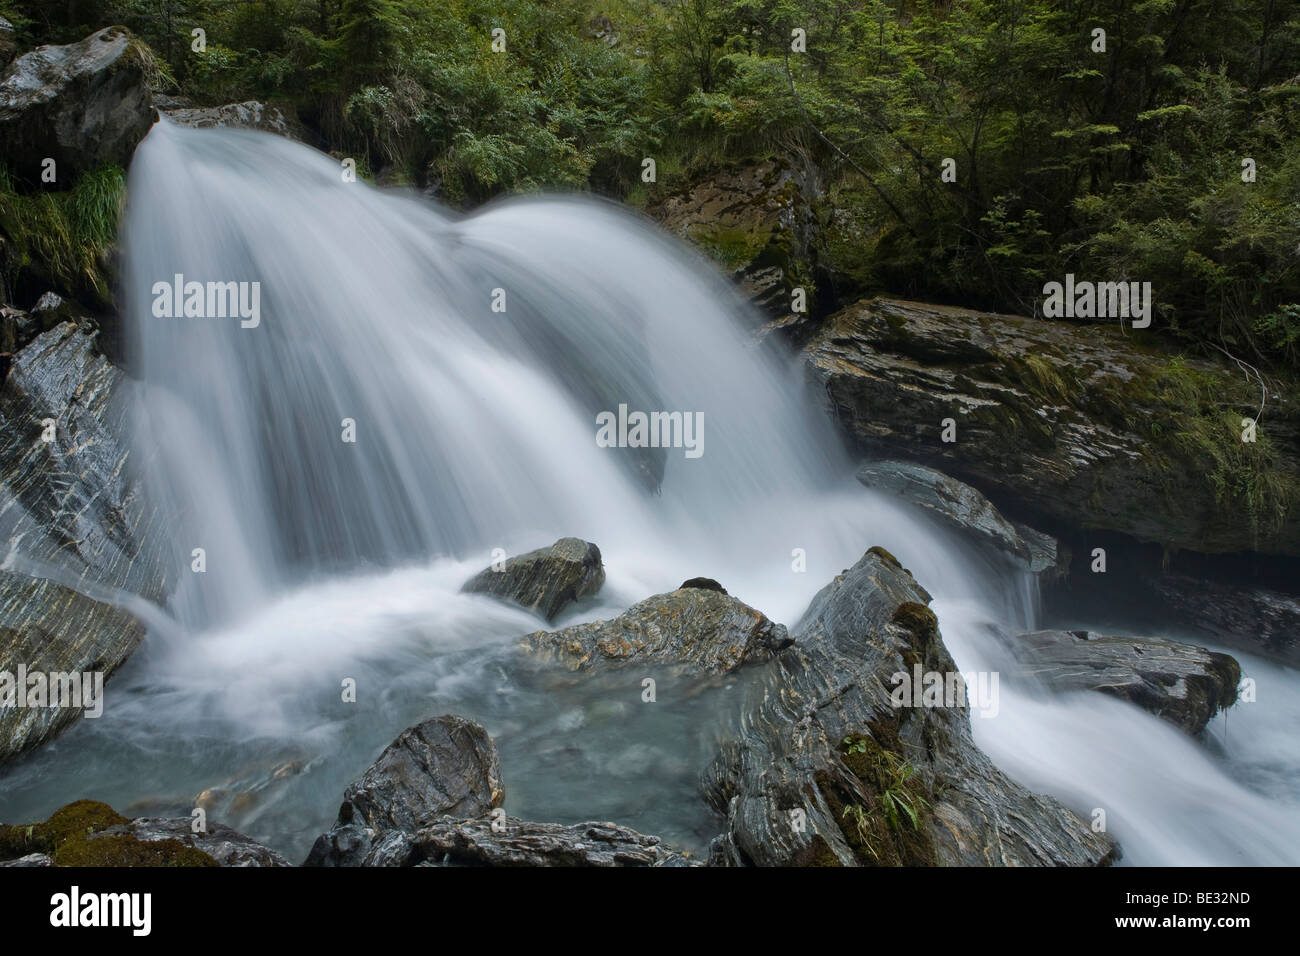 Atemberaubenden Wasserfall des Berges streamen Invincible Creek, Rees-Tal, Südinsel, Neuseeland Stockfoto